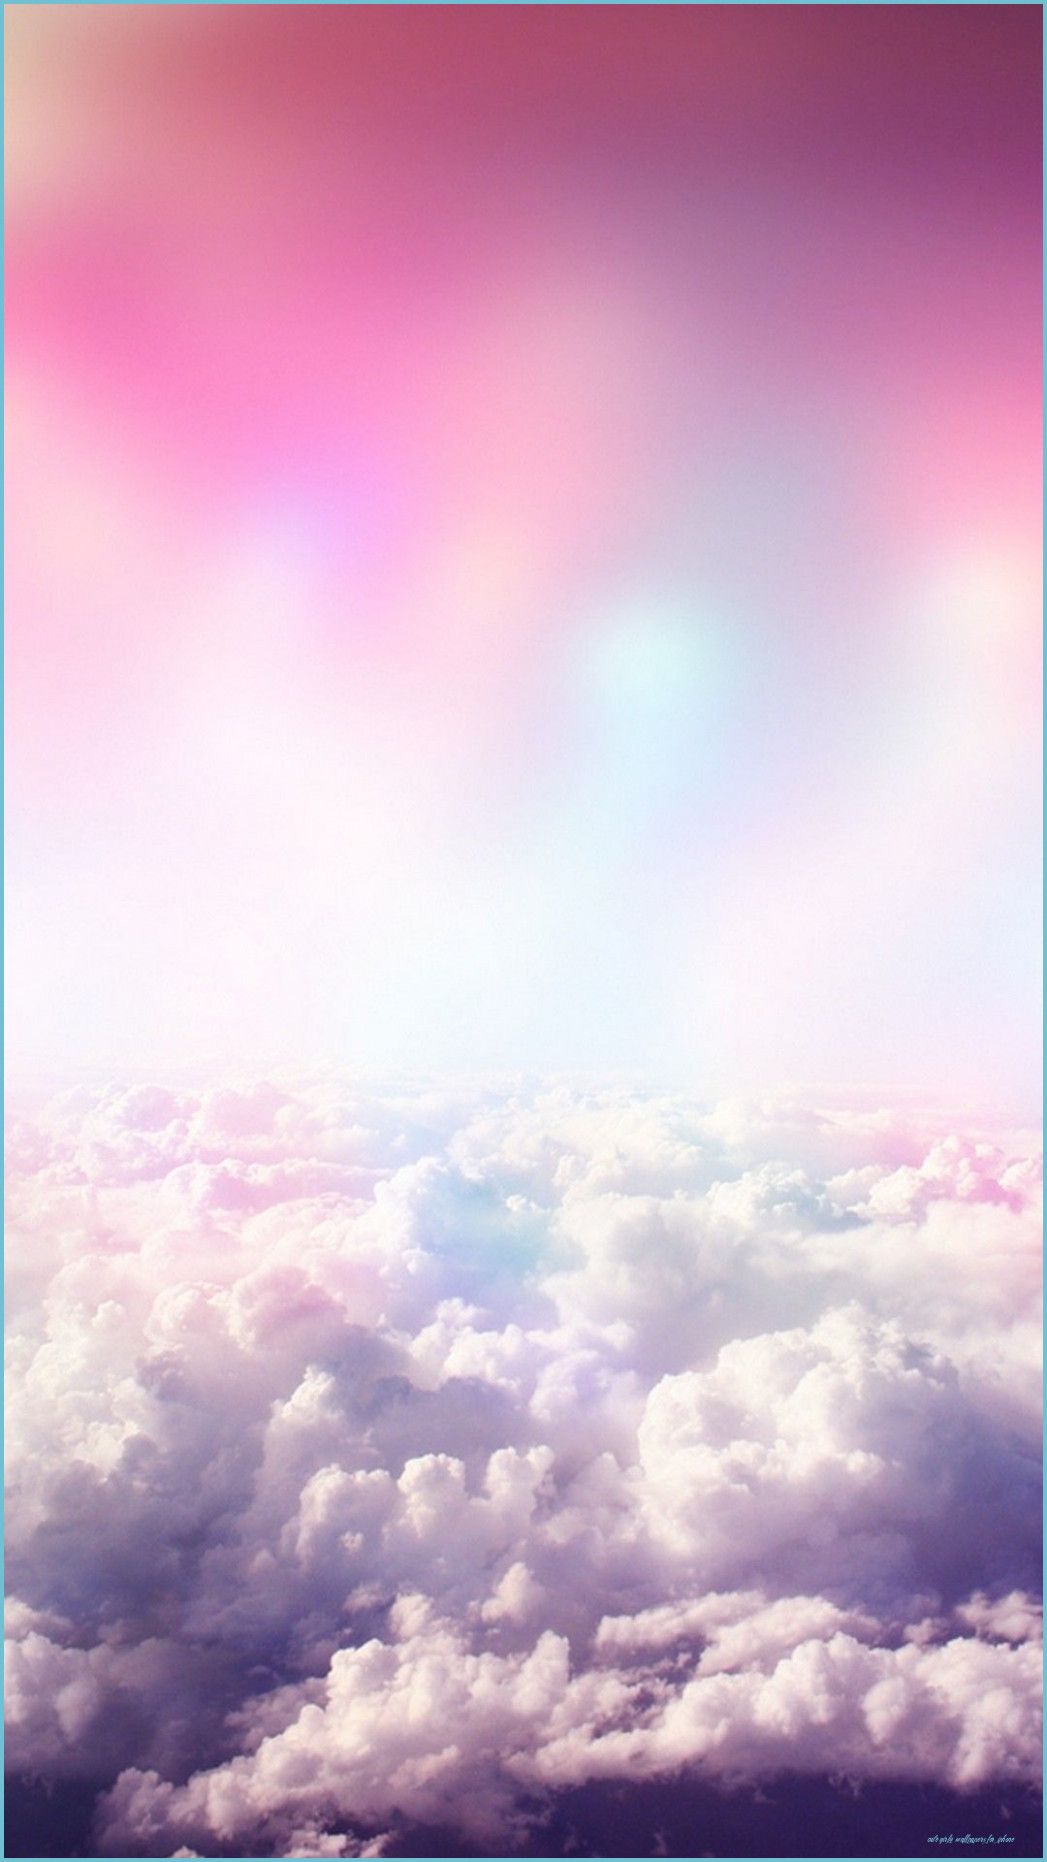 Cloud Cute Girly Wallpaper IPhone Best HD Wallpaper Wallpaper Girly Wallpaper For iPhone